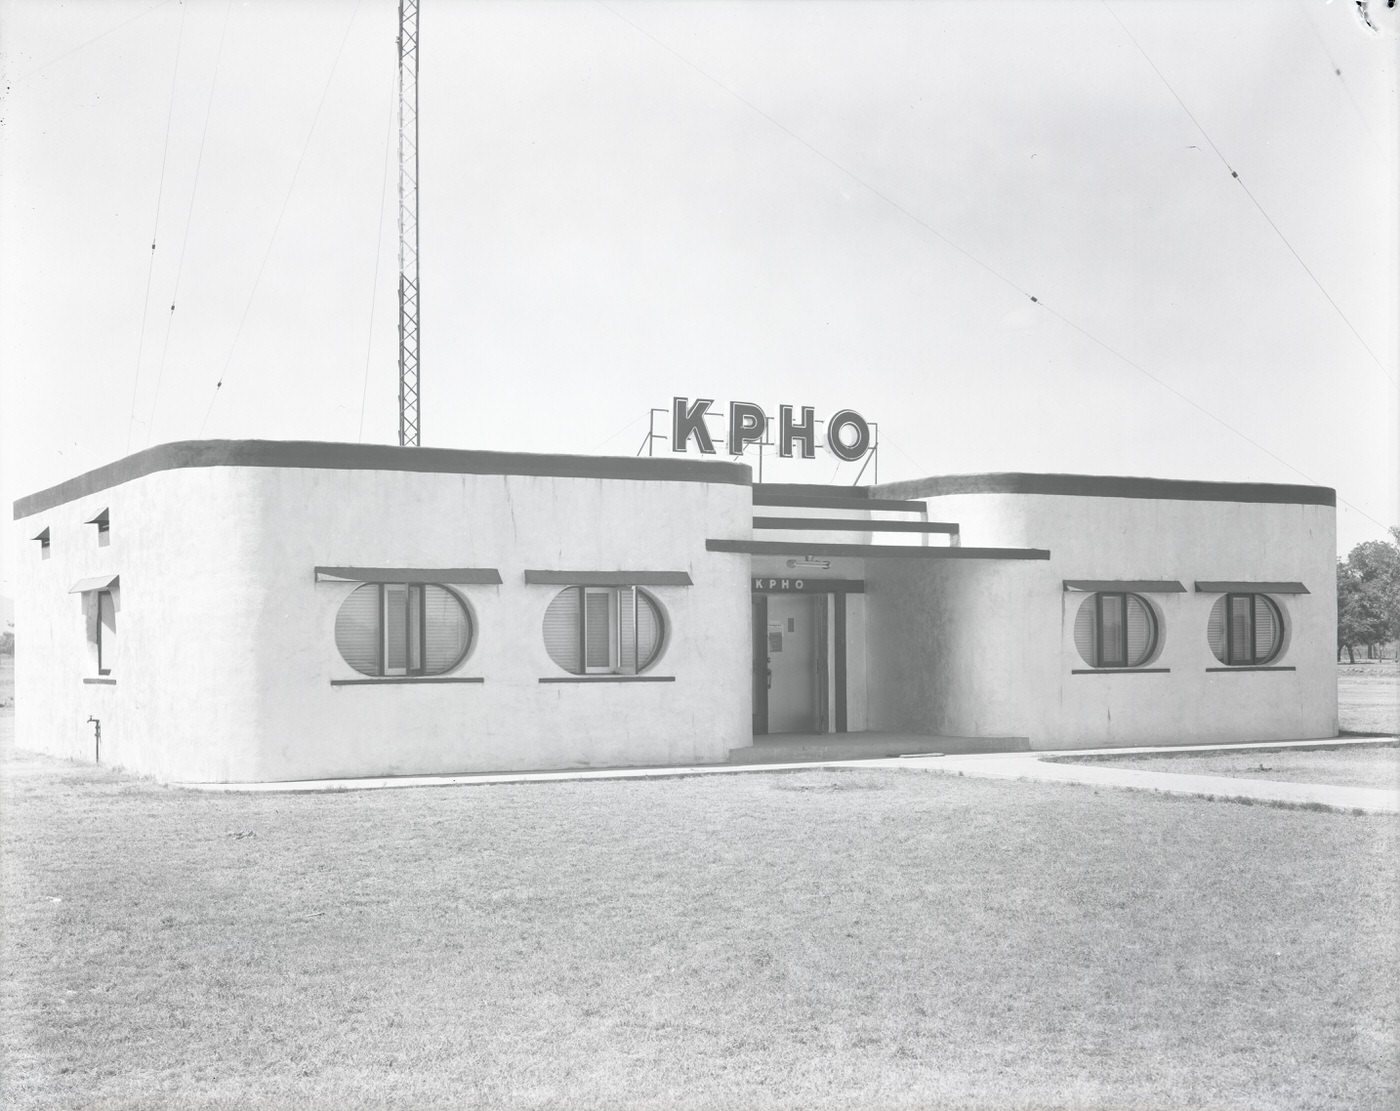 KPHO Radio Station Building Exterior, 1943